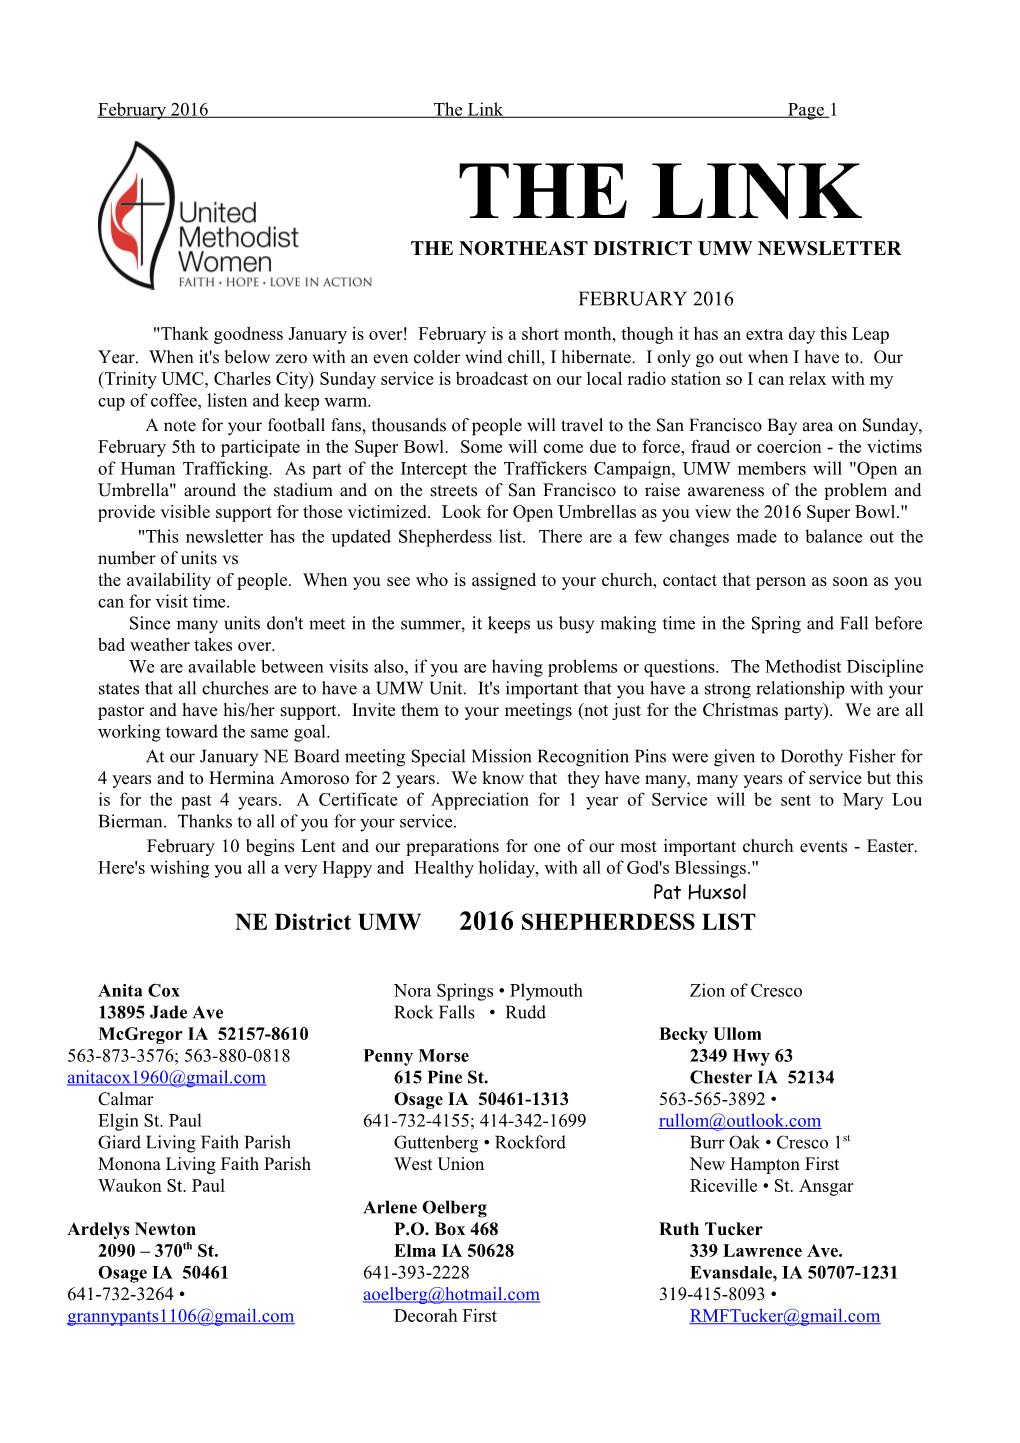 The Northeast District UMW Newsletter